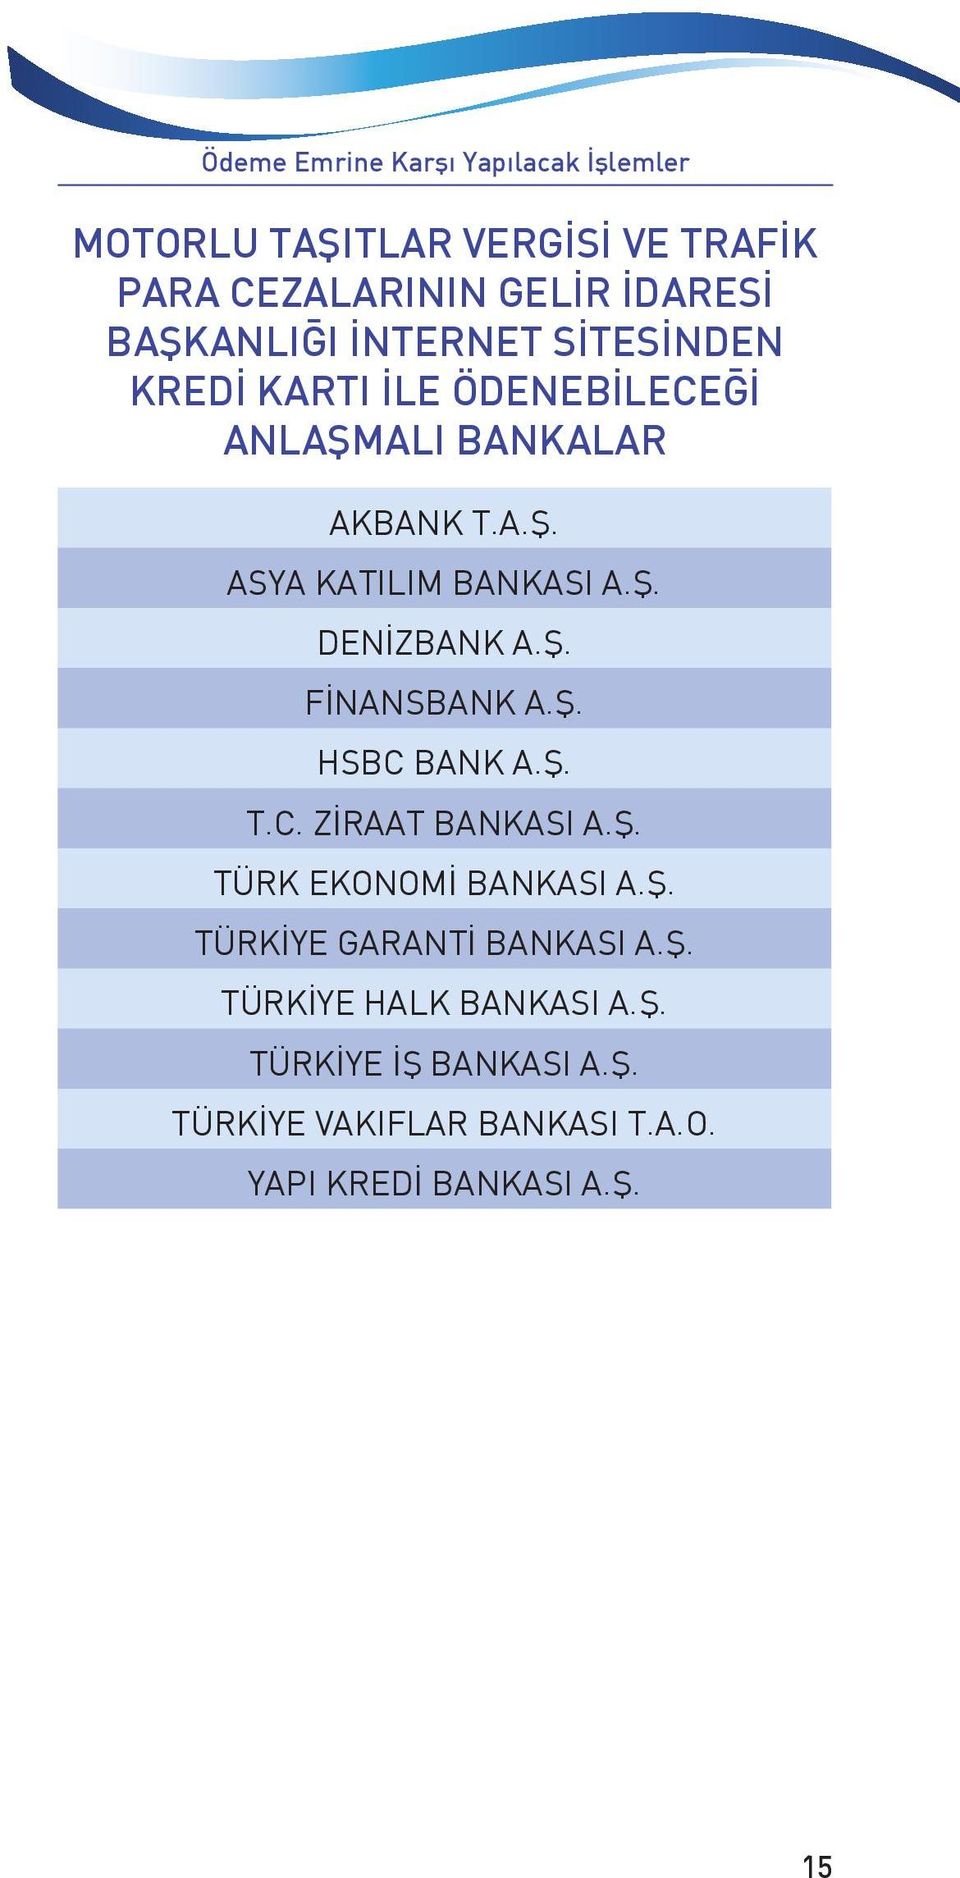 Ş. FİNANSBANK A.Ş. HSBC BANK A.Ş. T.C. ZİRAAT BANKASI A.Ş. TÜRK EKONOMİ BANKASI A.Ş. TÜRKİYE GARANTİ BANKASI A.Ş. TÜRKİYE HALK BANKASI A.